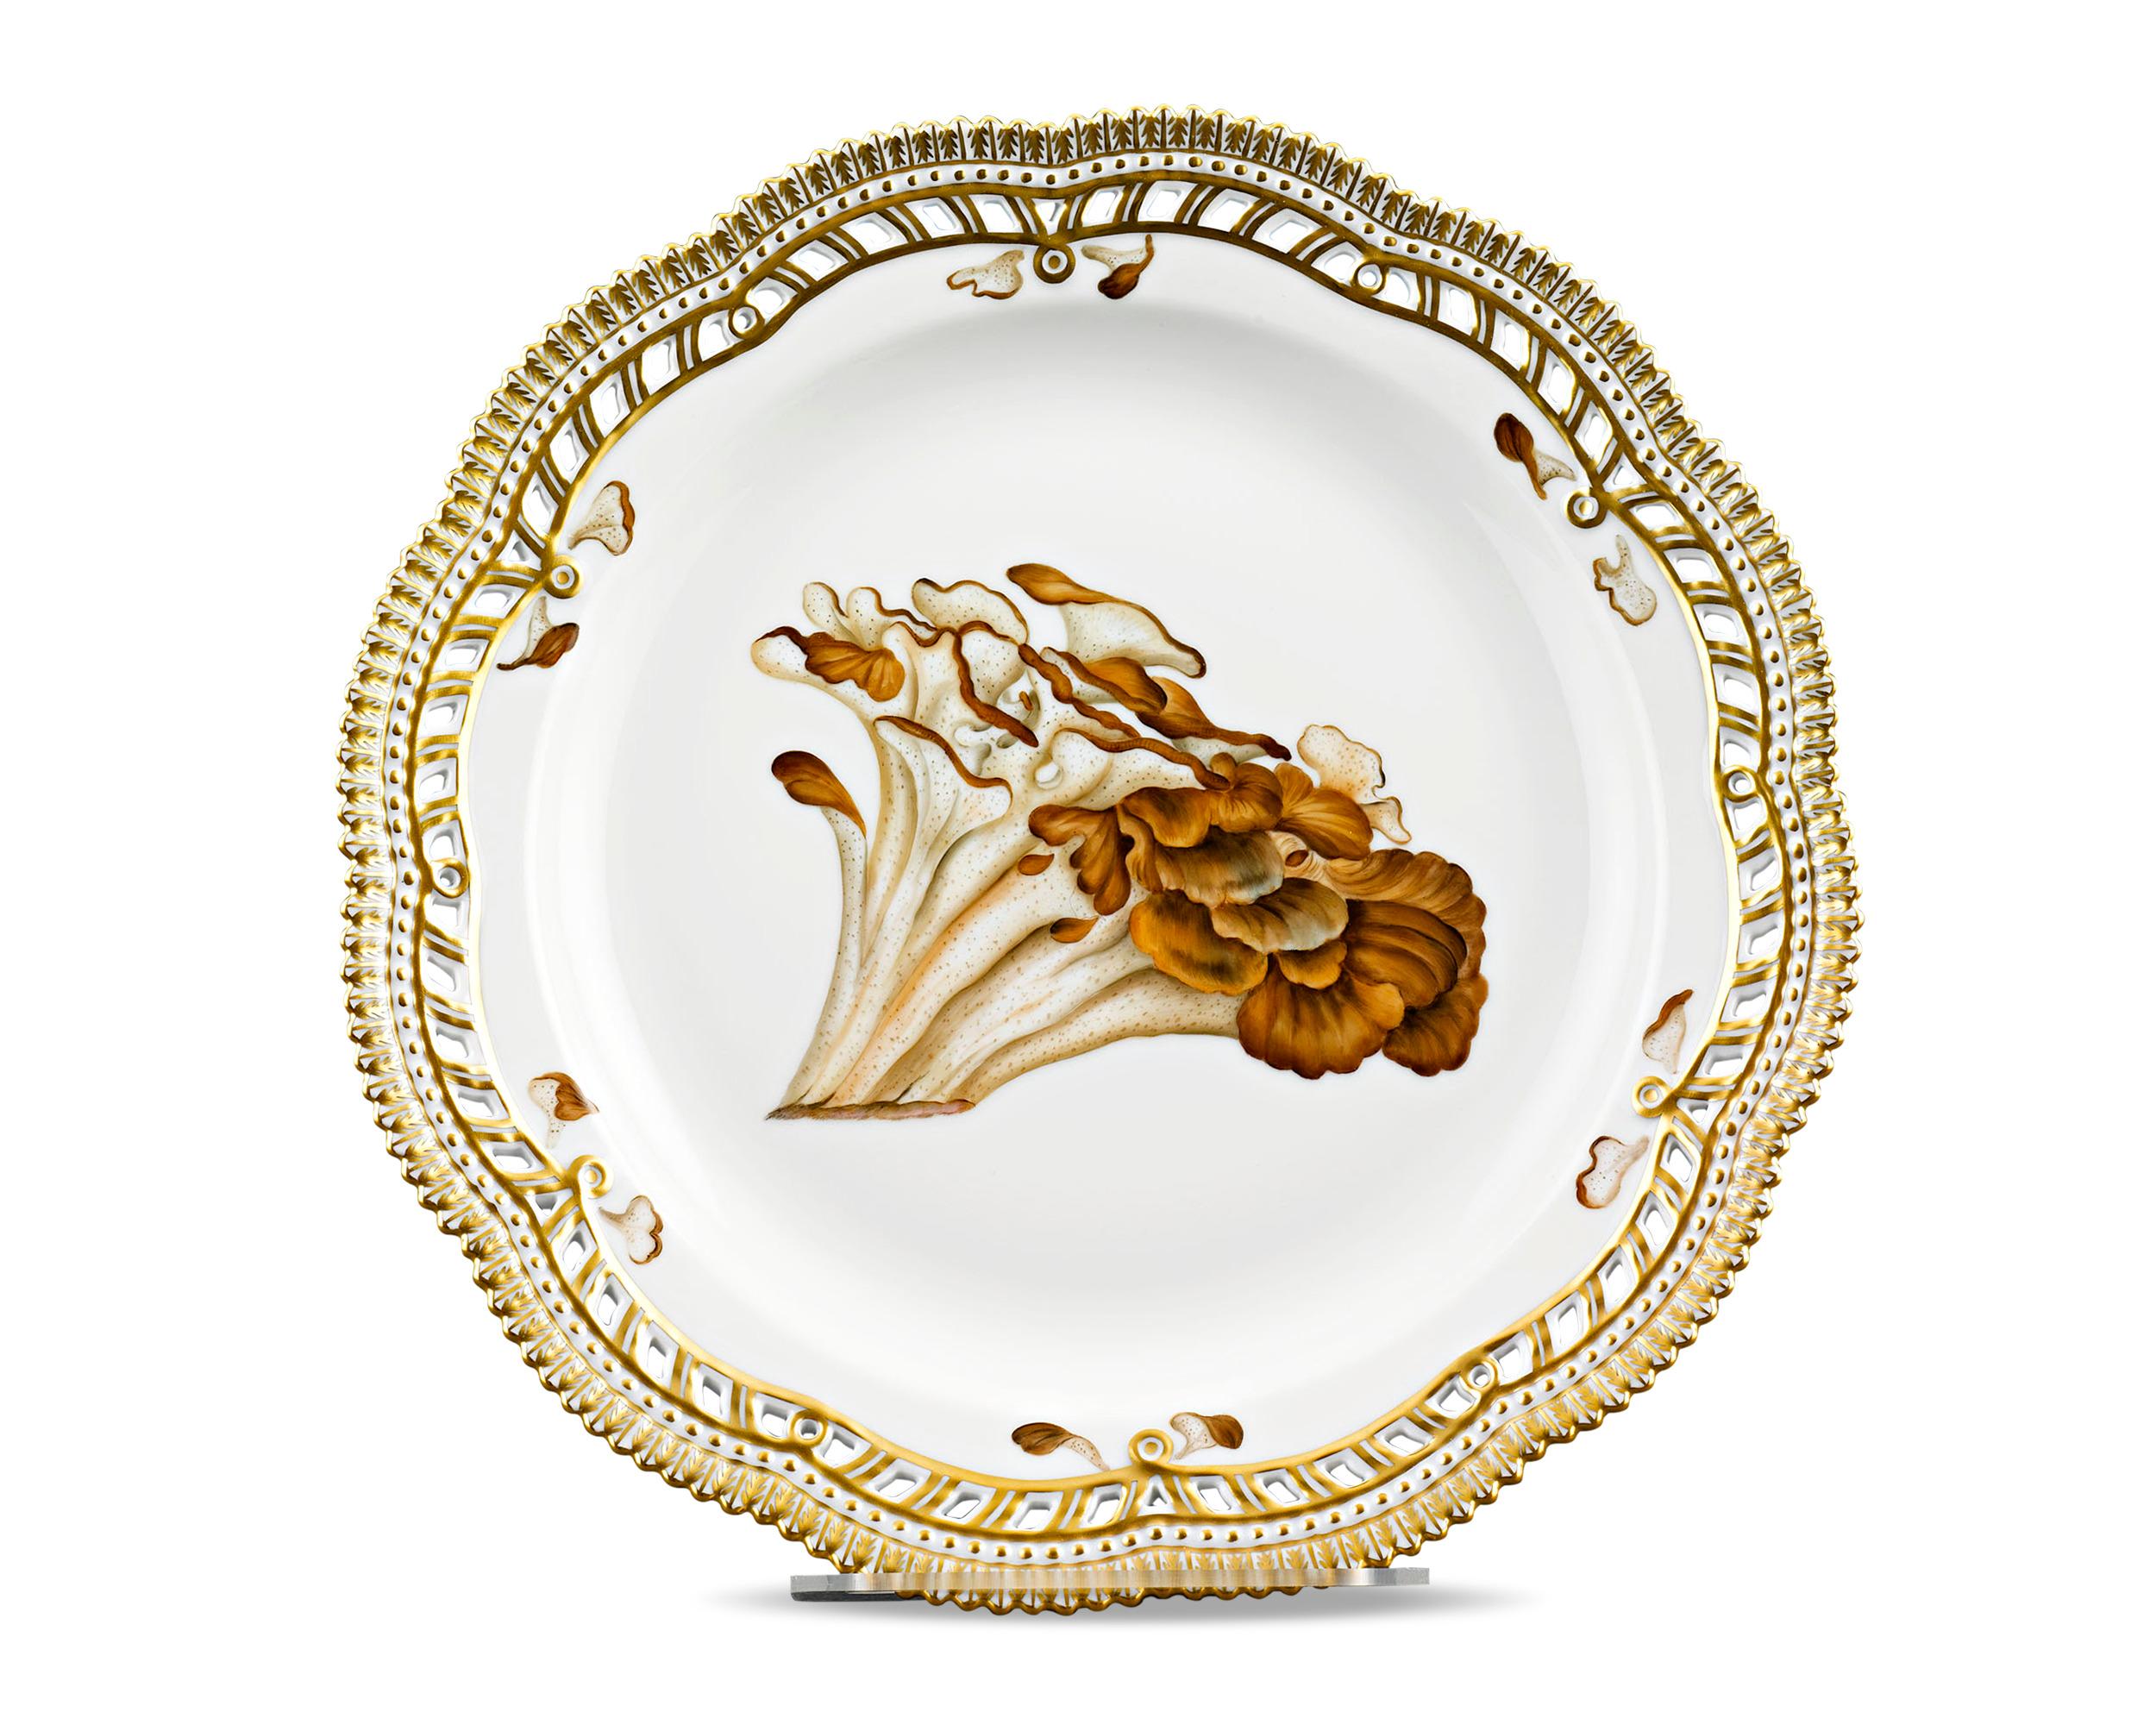 Other Flora Danica Fungi Dinner Plates by Royal Copenhagen